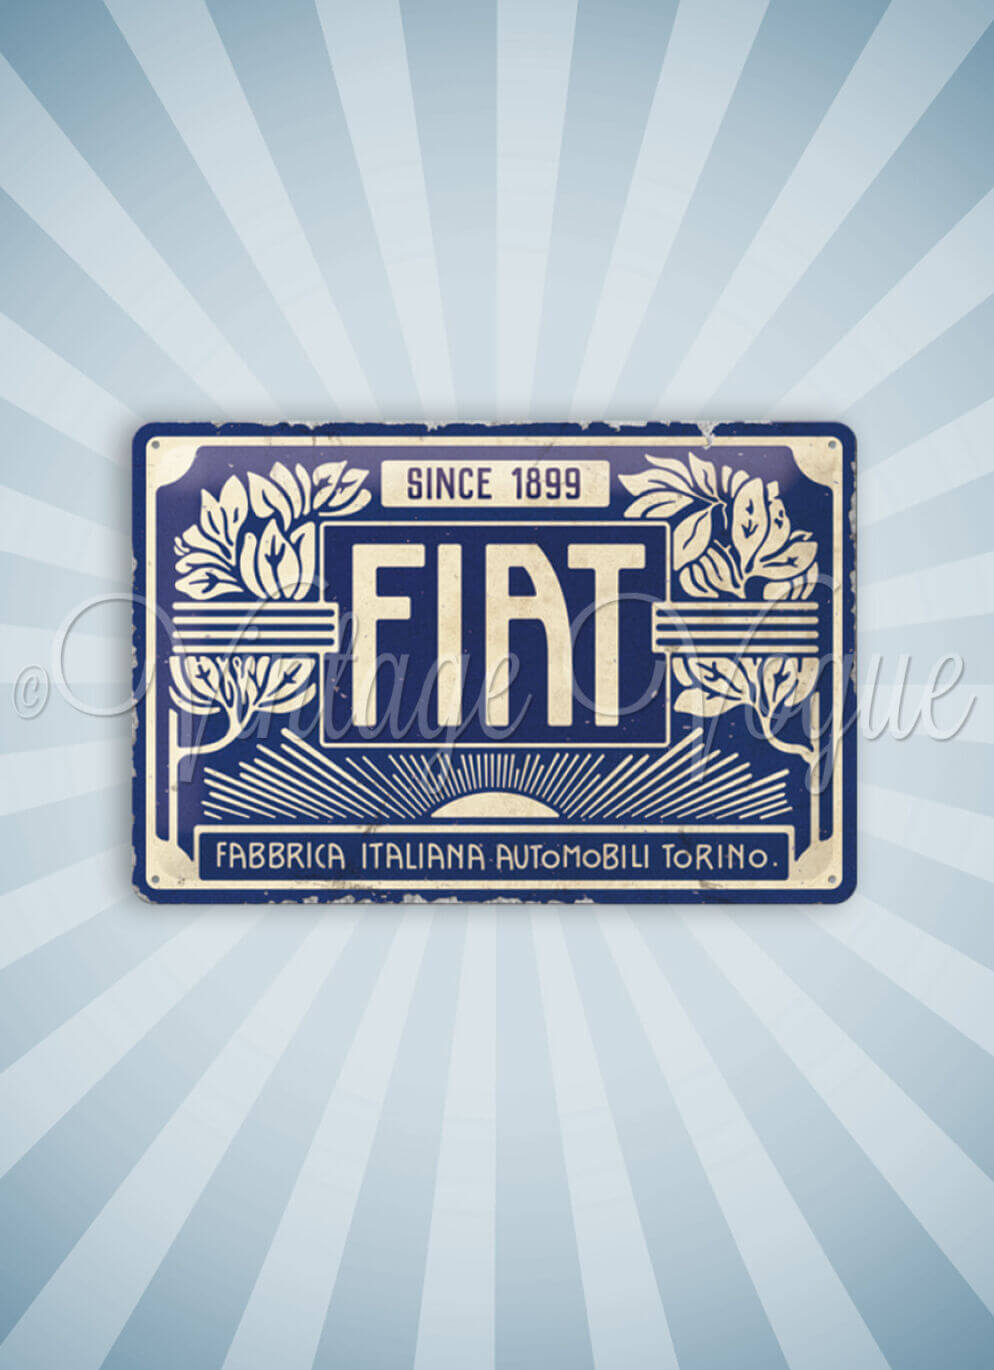 Nostalgic Art Retro Blechschild "Fiat - Since 1899"